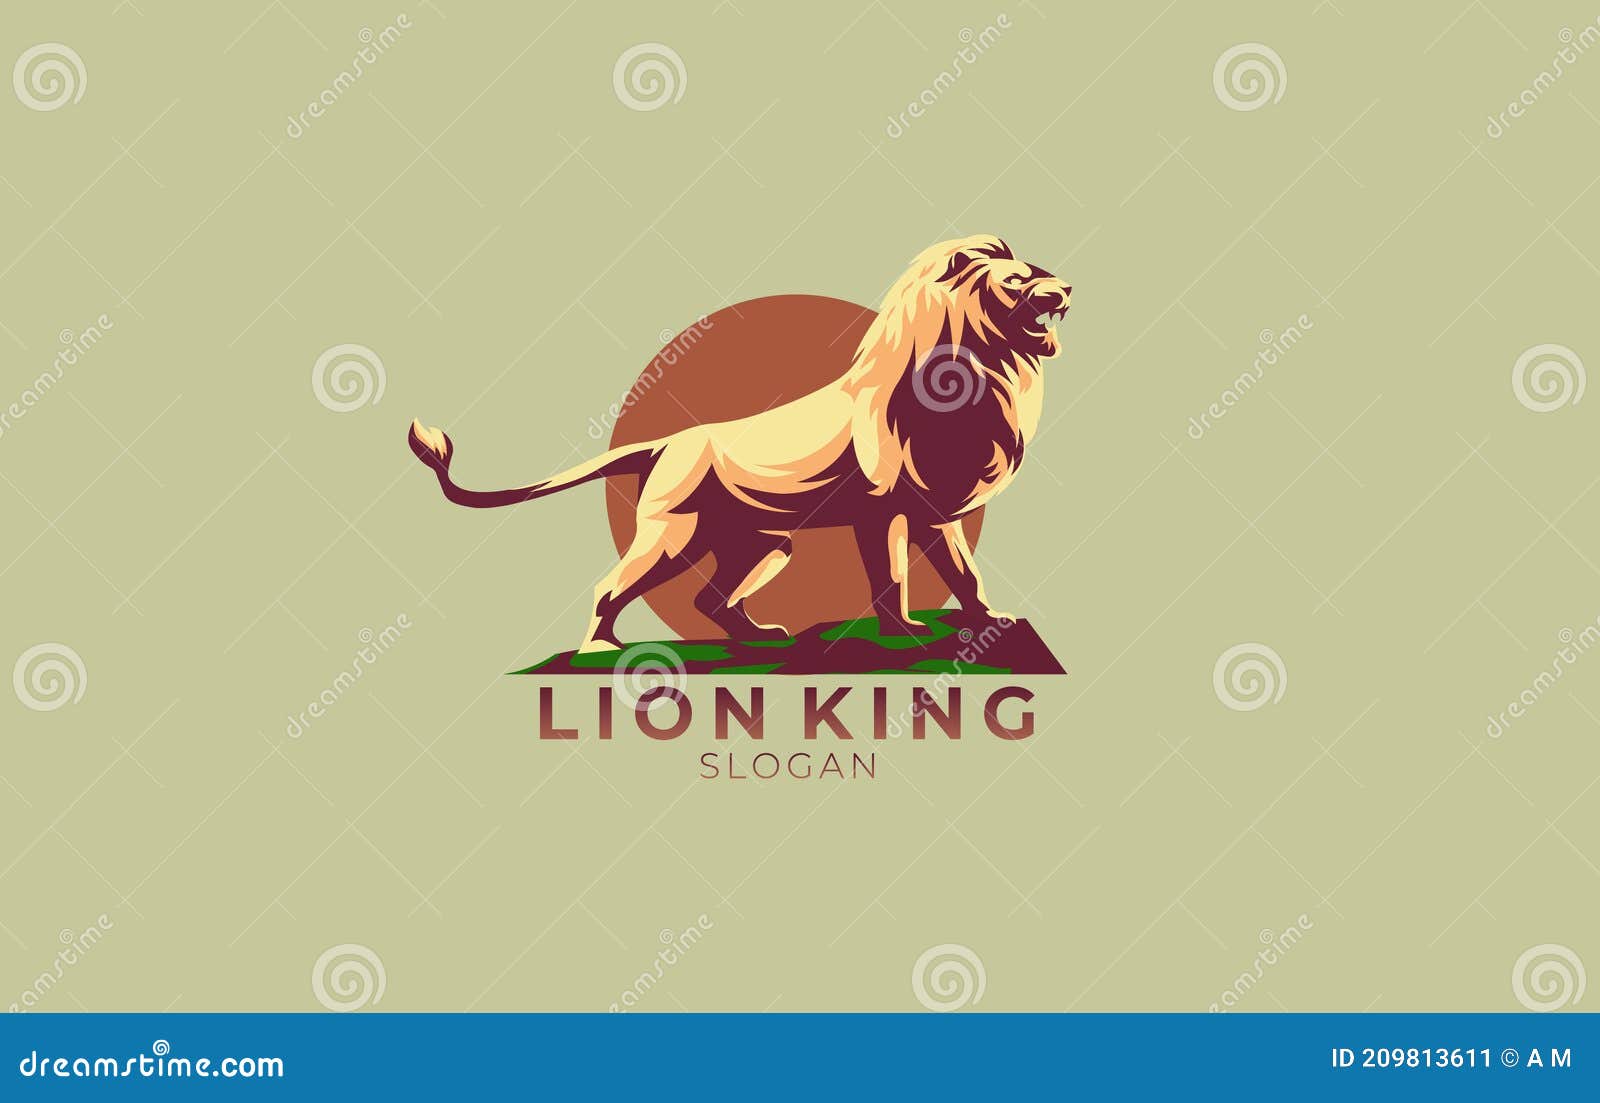 Lion King Jungle Stock Illustrations 4 351 Lion King Jungle Stock Illustrations Vectors Clipart Dreamstime